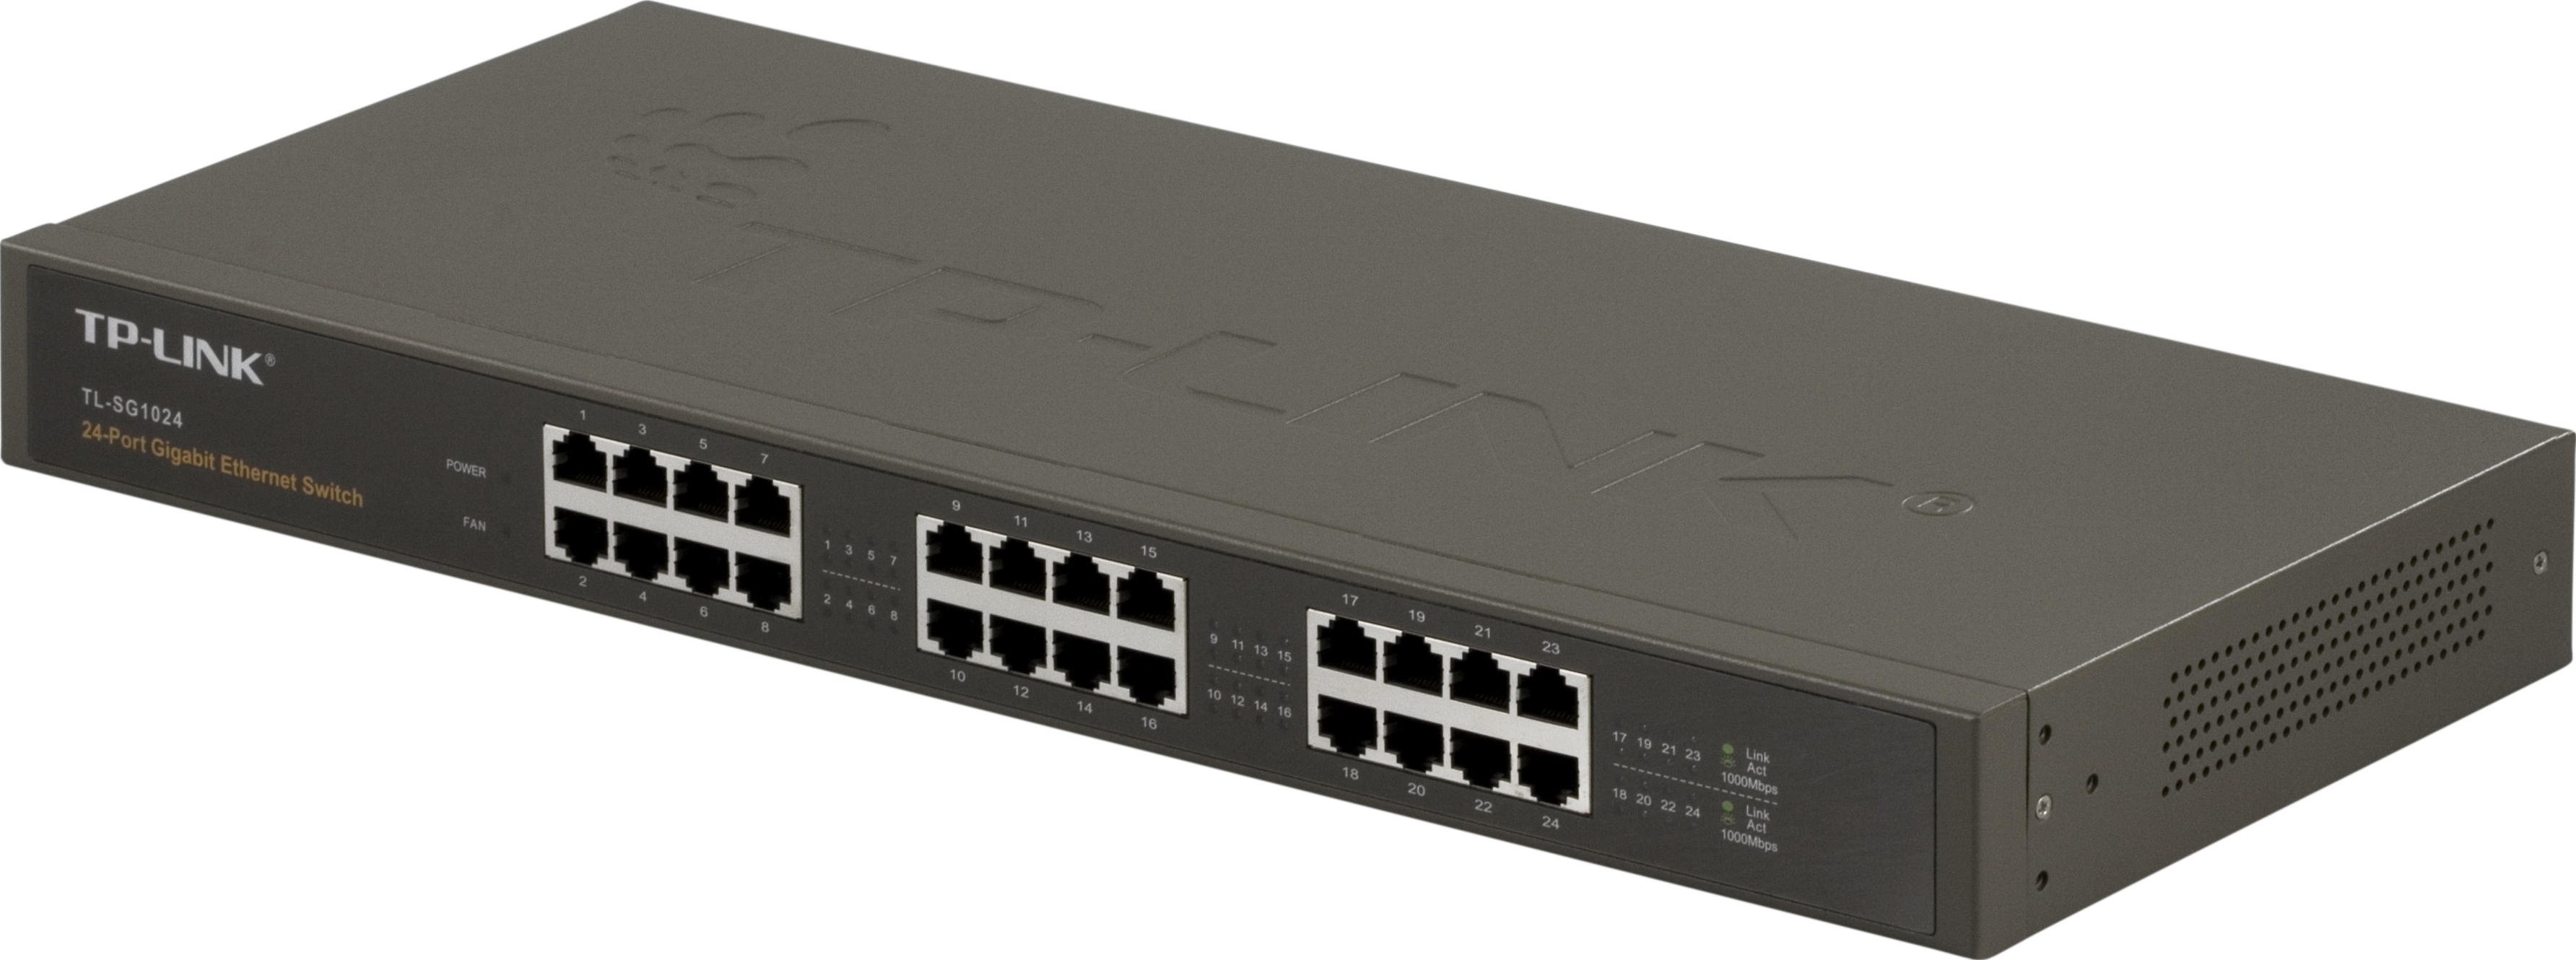 TP-LINK, nätverksswitch, 24-ports 10/100/1000Mbps, RJ45, metall, 19"